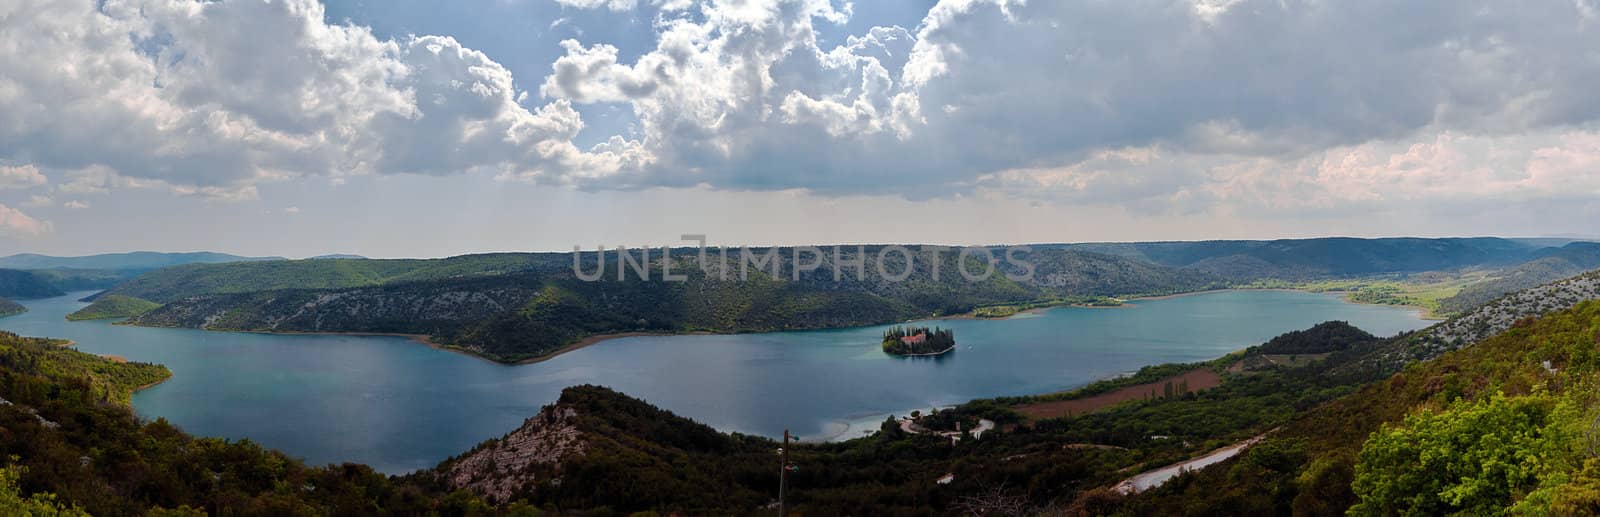 Panorama of the Krka river and Visovac monastery, Croatia by Lamarinx